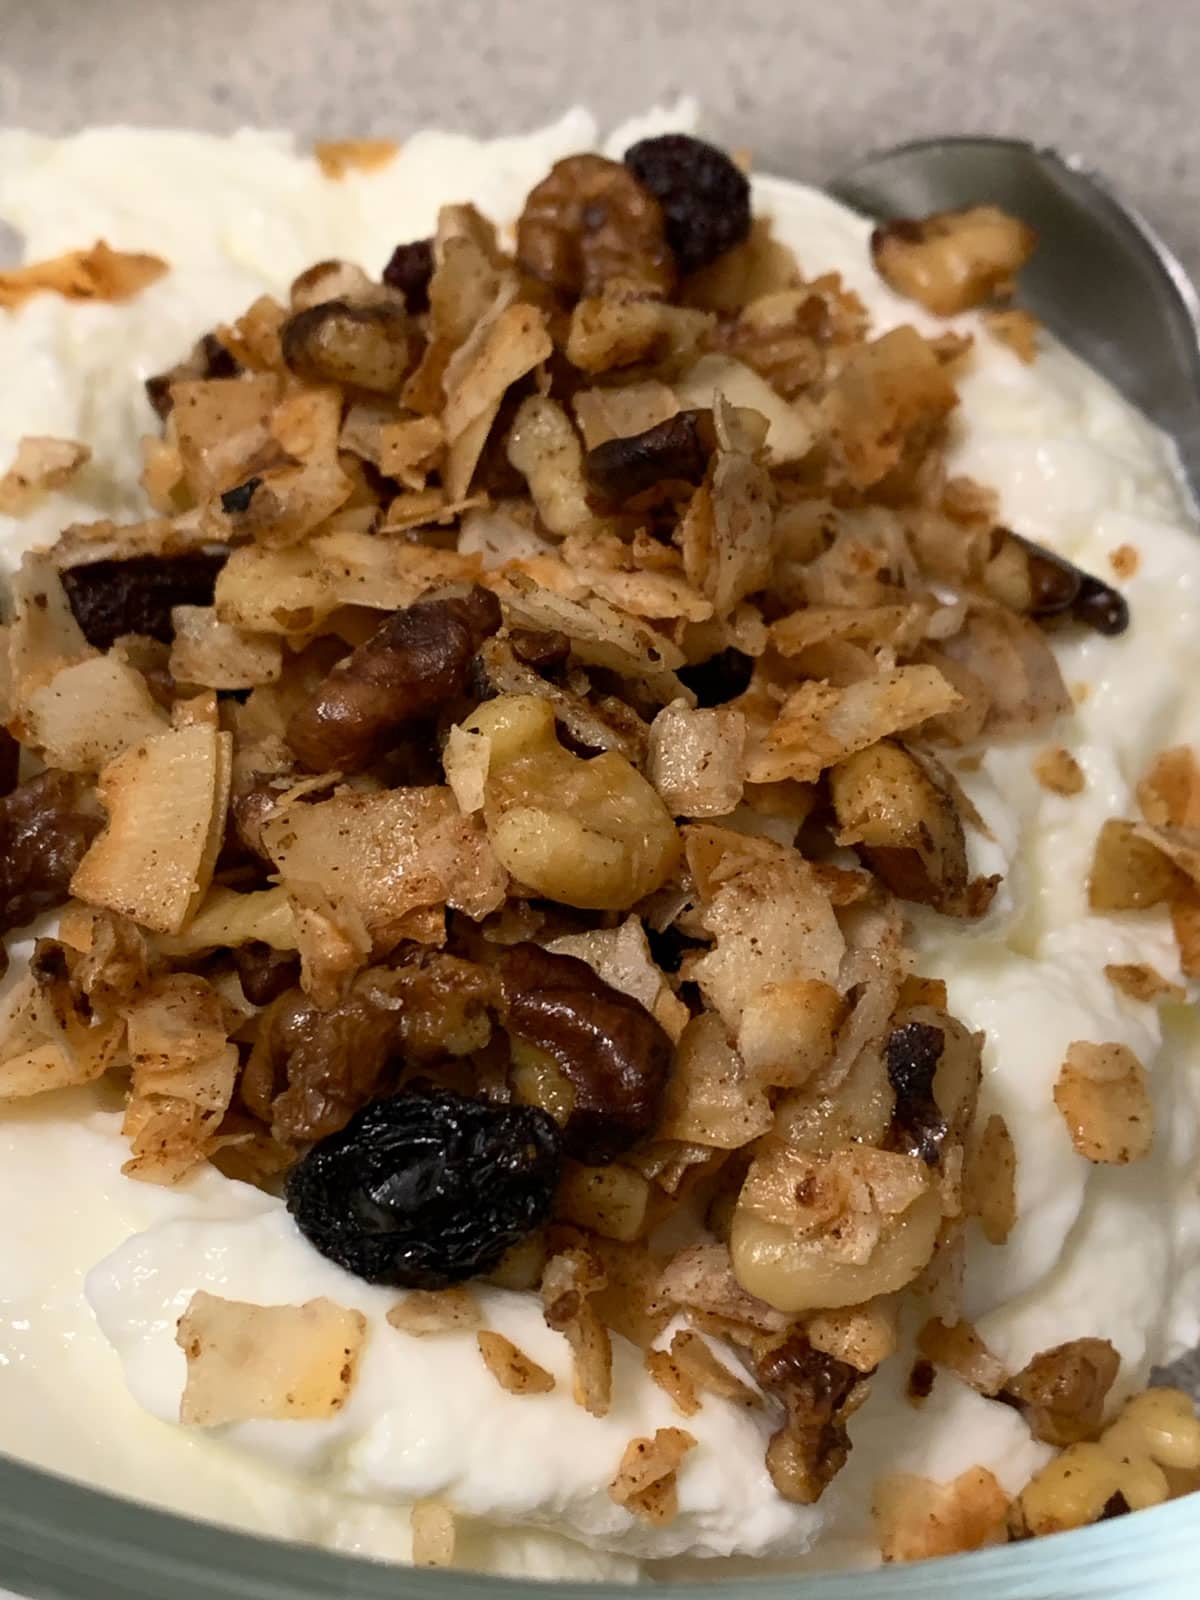 Serving suggestion - grain free granola on home made Greek yogurt